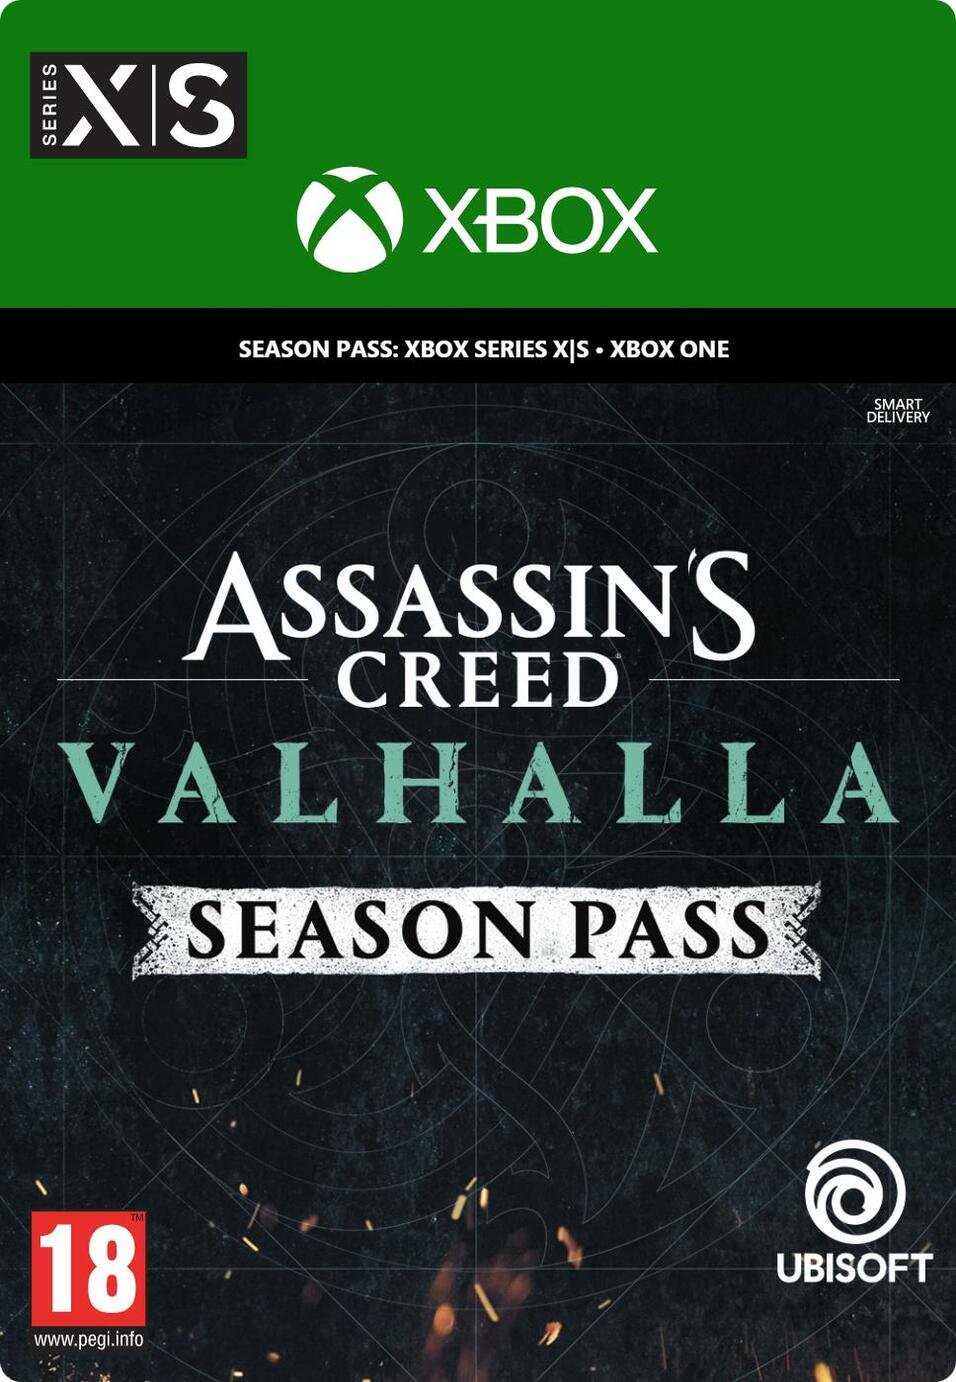 Assassin's Creed Valhalla Season Pass Digital Download